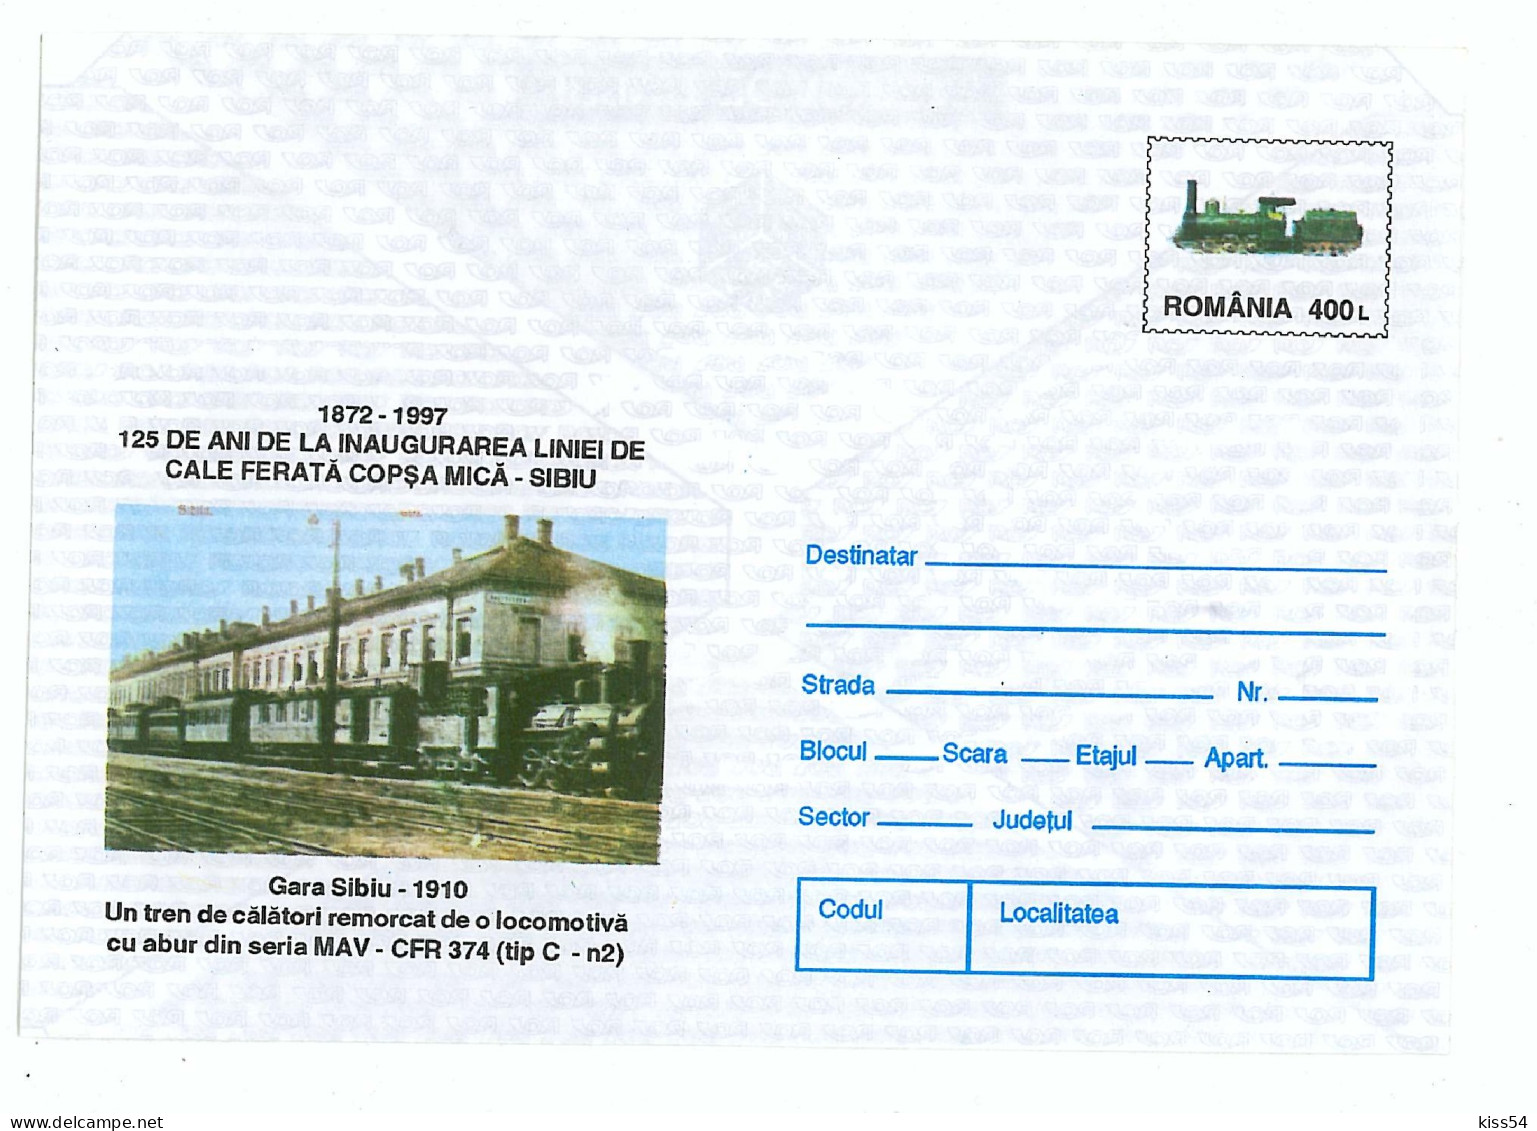 IP 97 - 42 Old TRAIN And Railway Station SIBIU, Romania - Stationery - Unused - 1997 - Postal Stationery